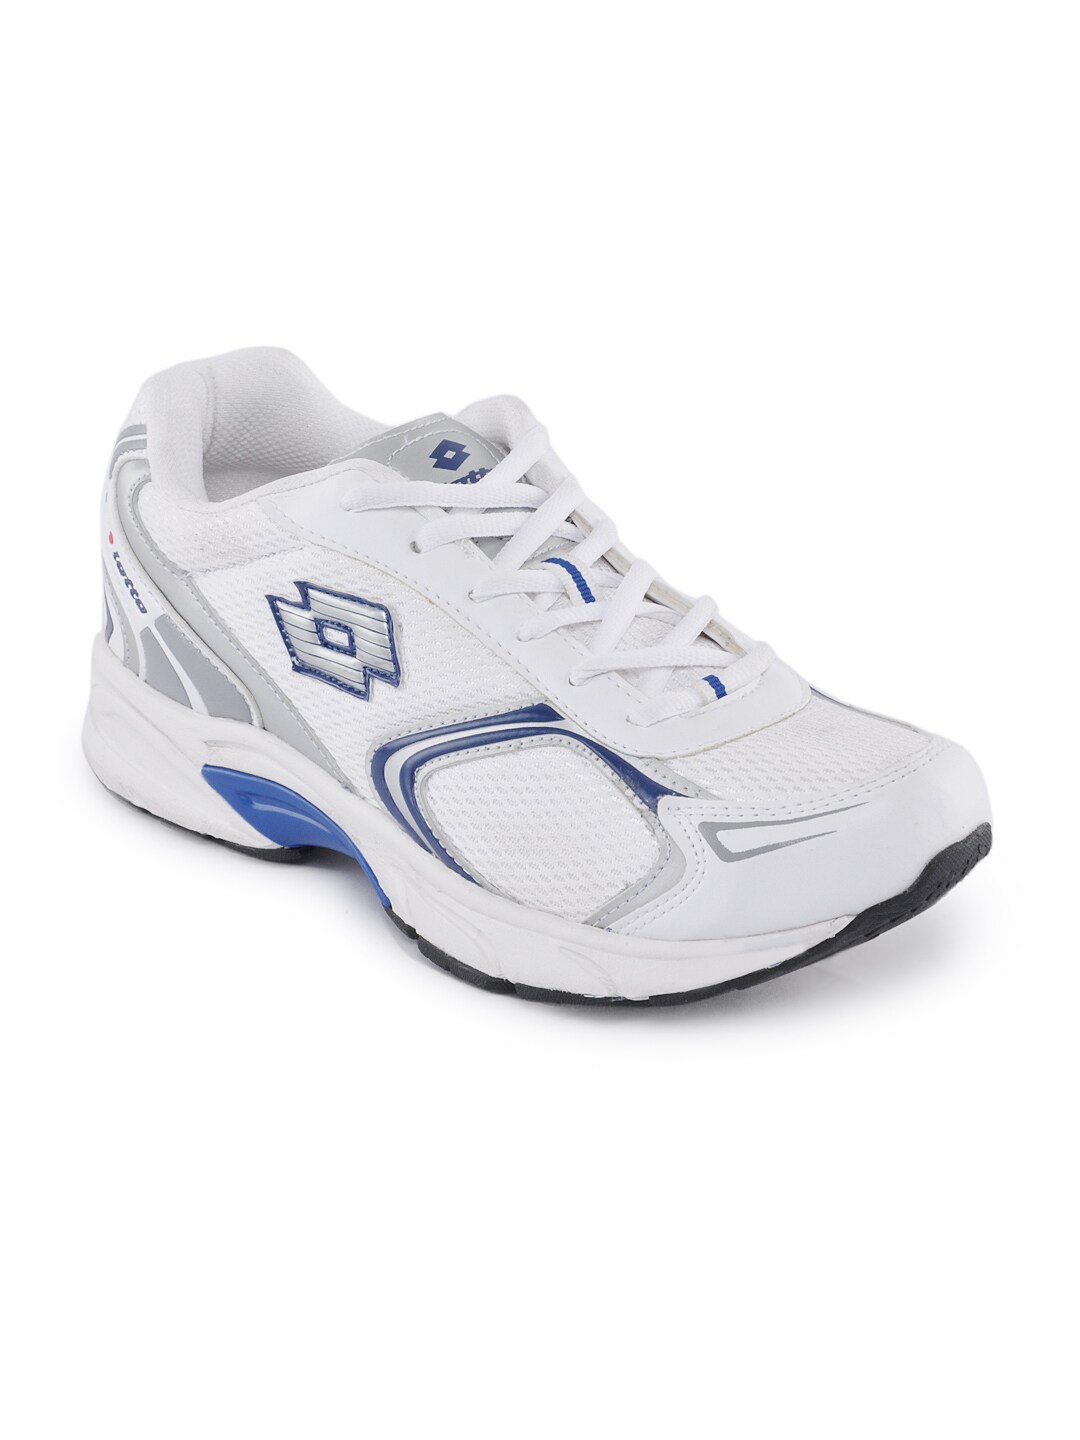 Lotto Men White Porteo Sports Shoes